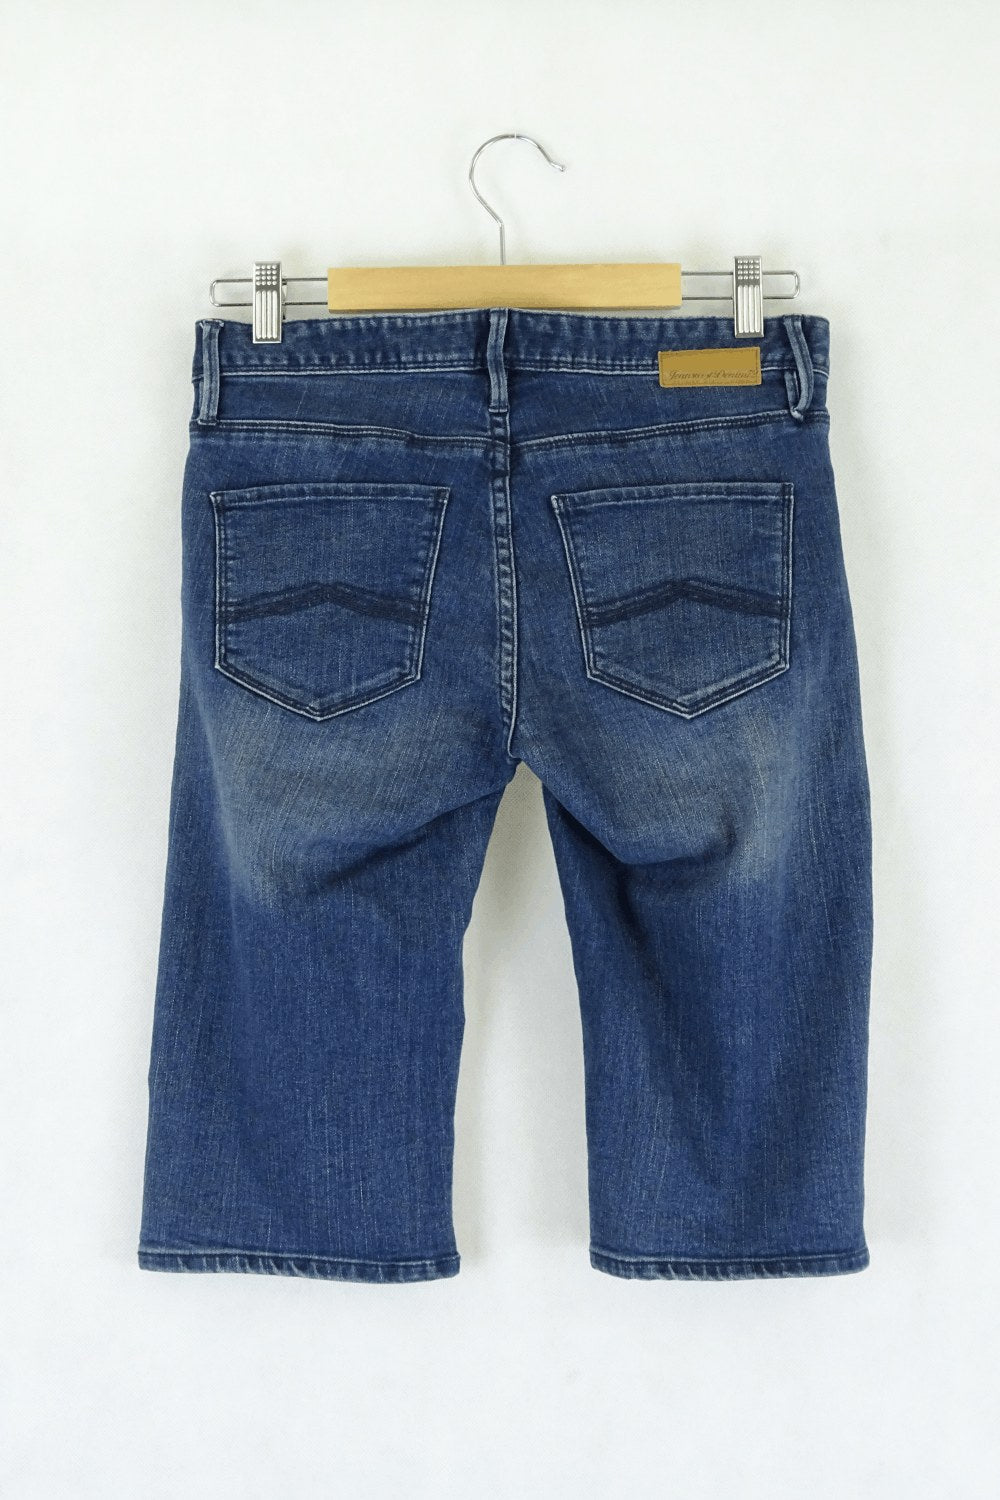 Jeanswest denim shorts 8